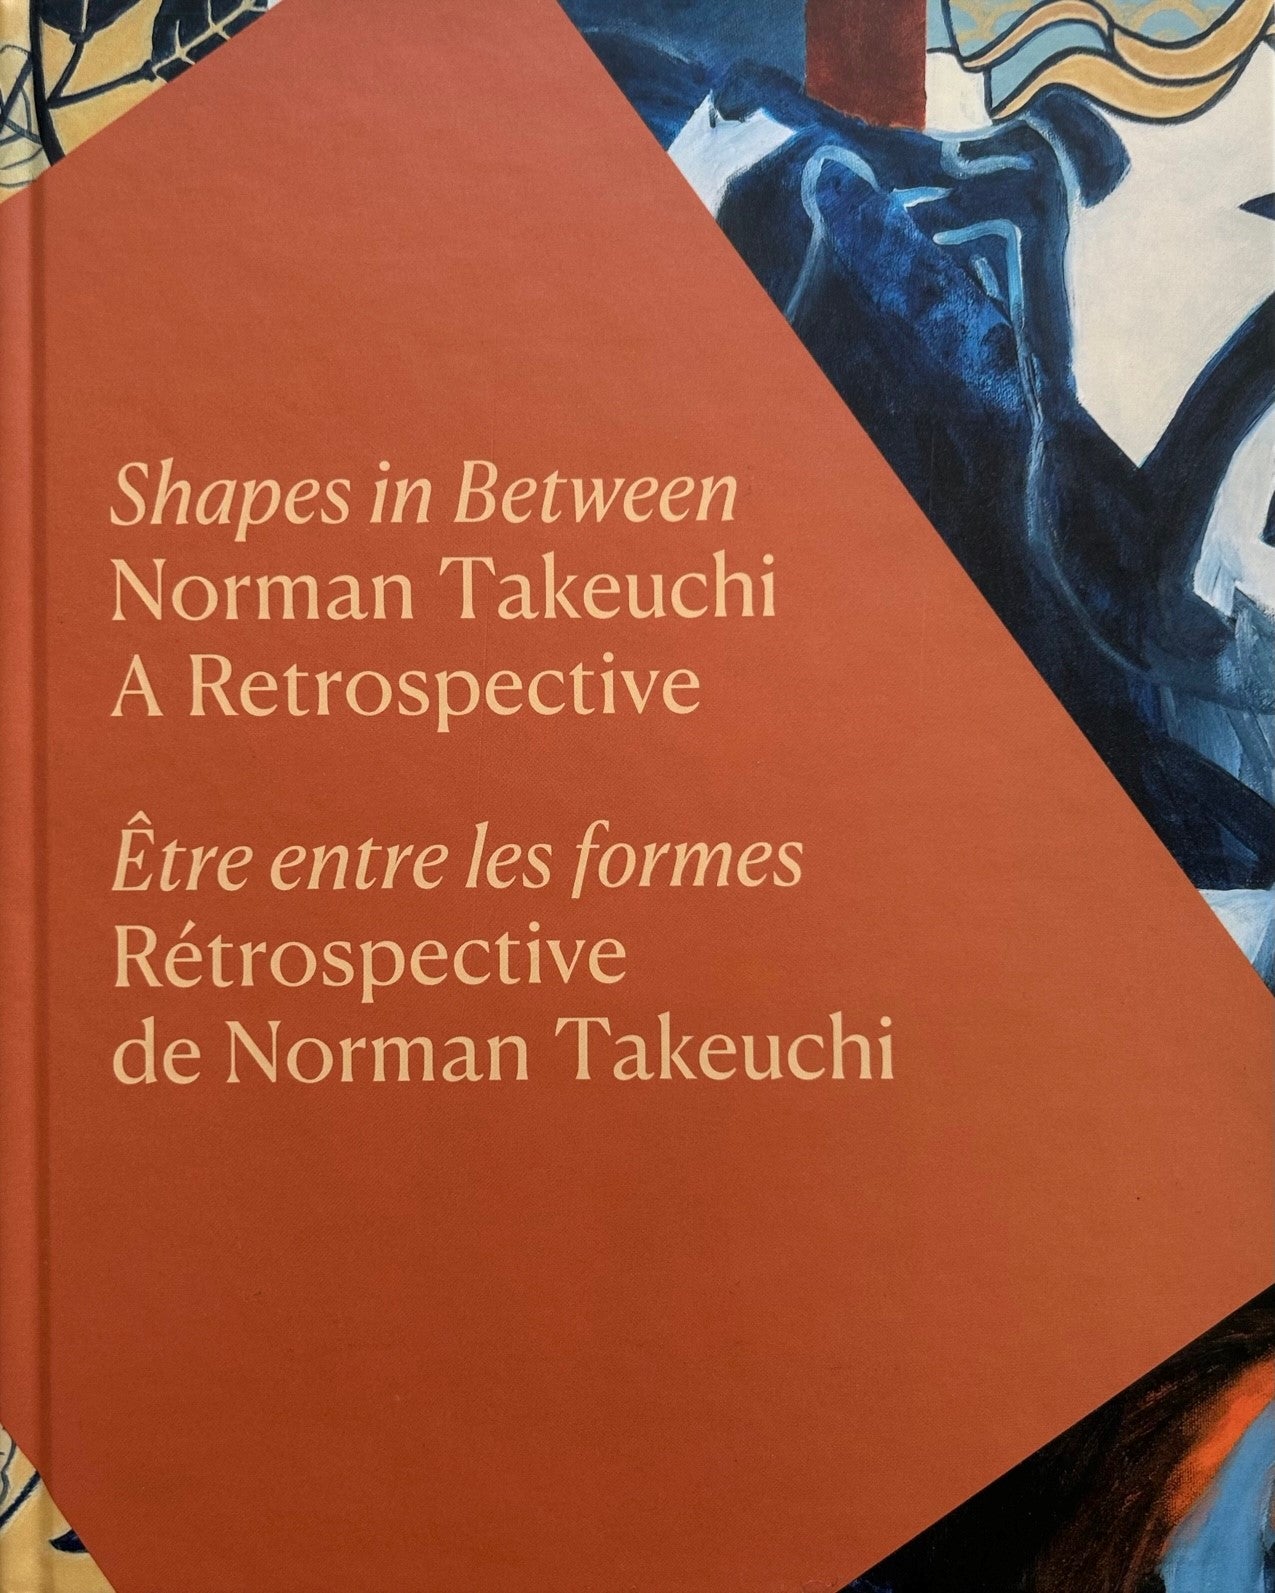 Shapes in Between: Norman Takeuchi - A Retrospective